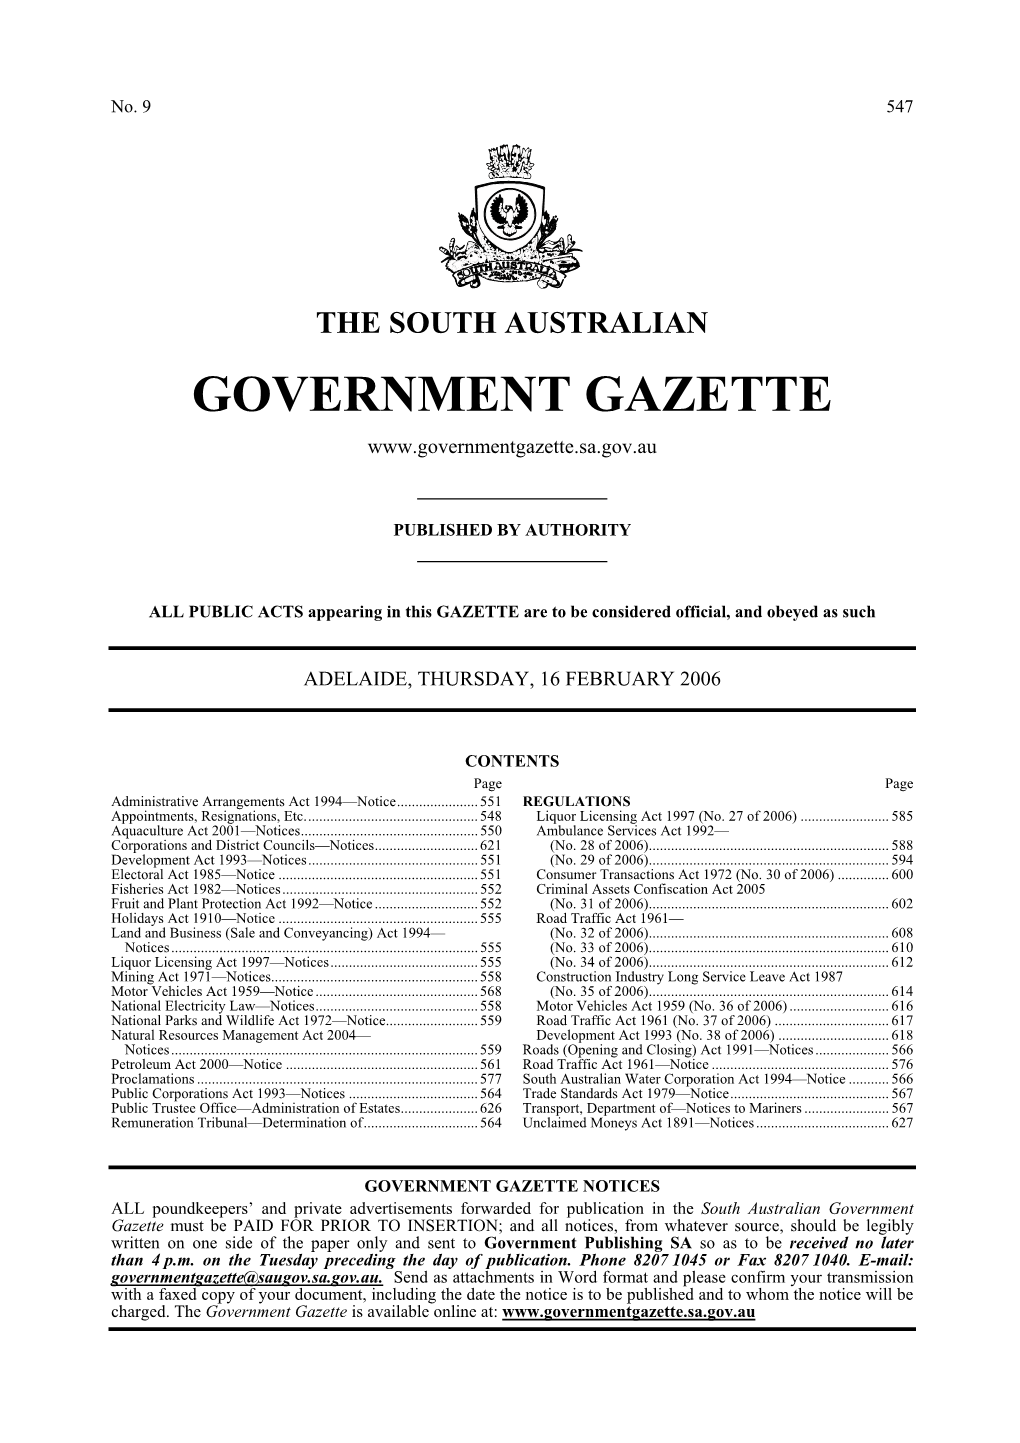 The South Australian Government Gazette